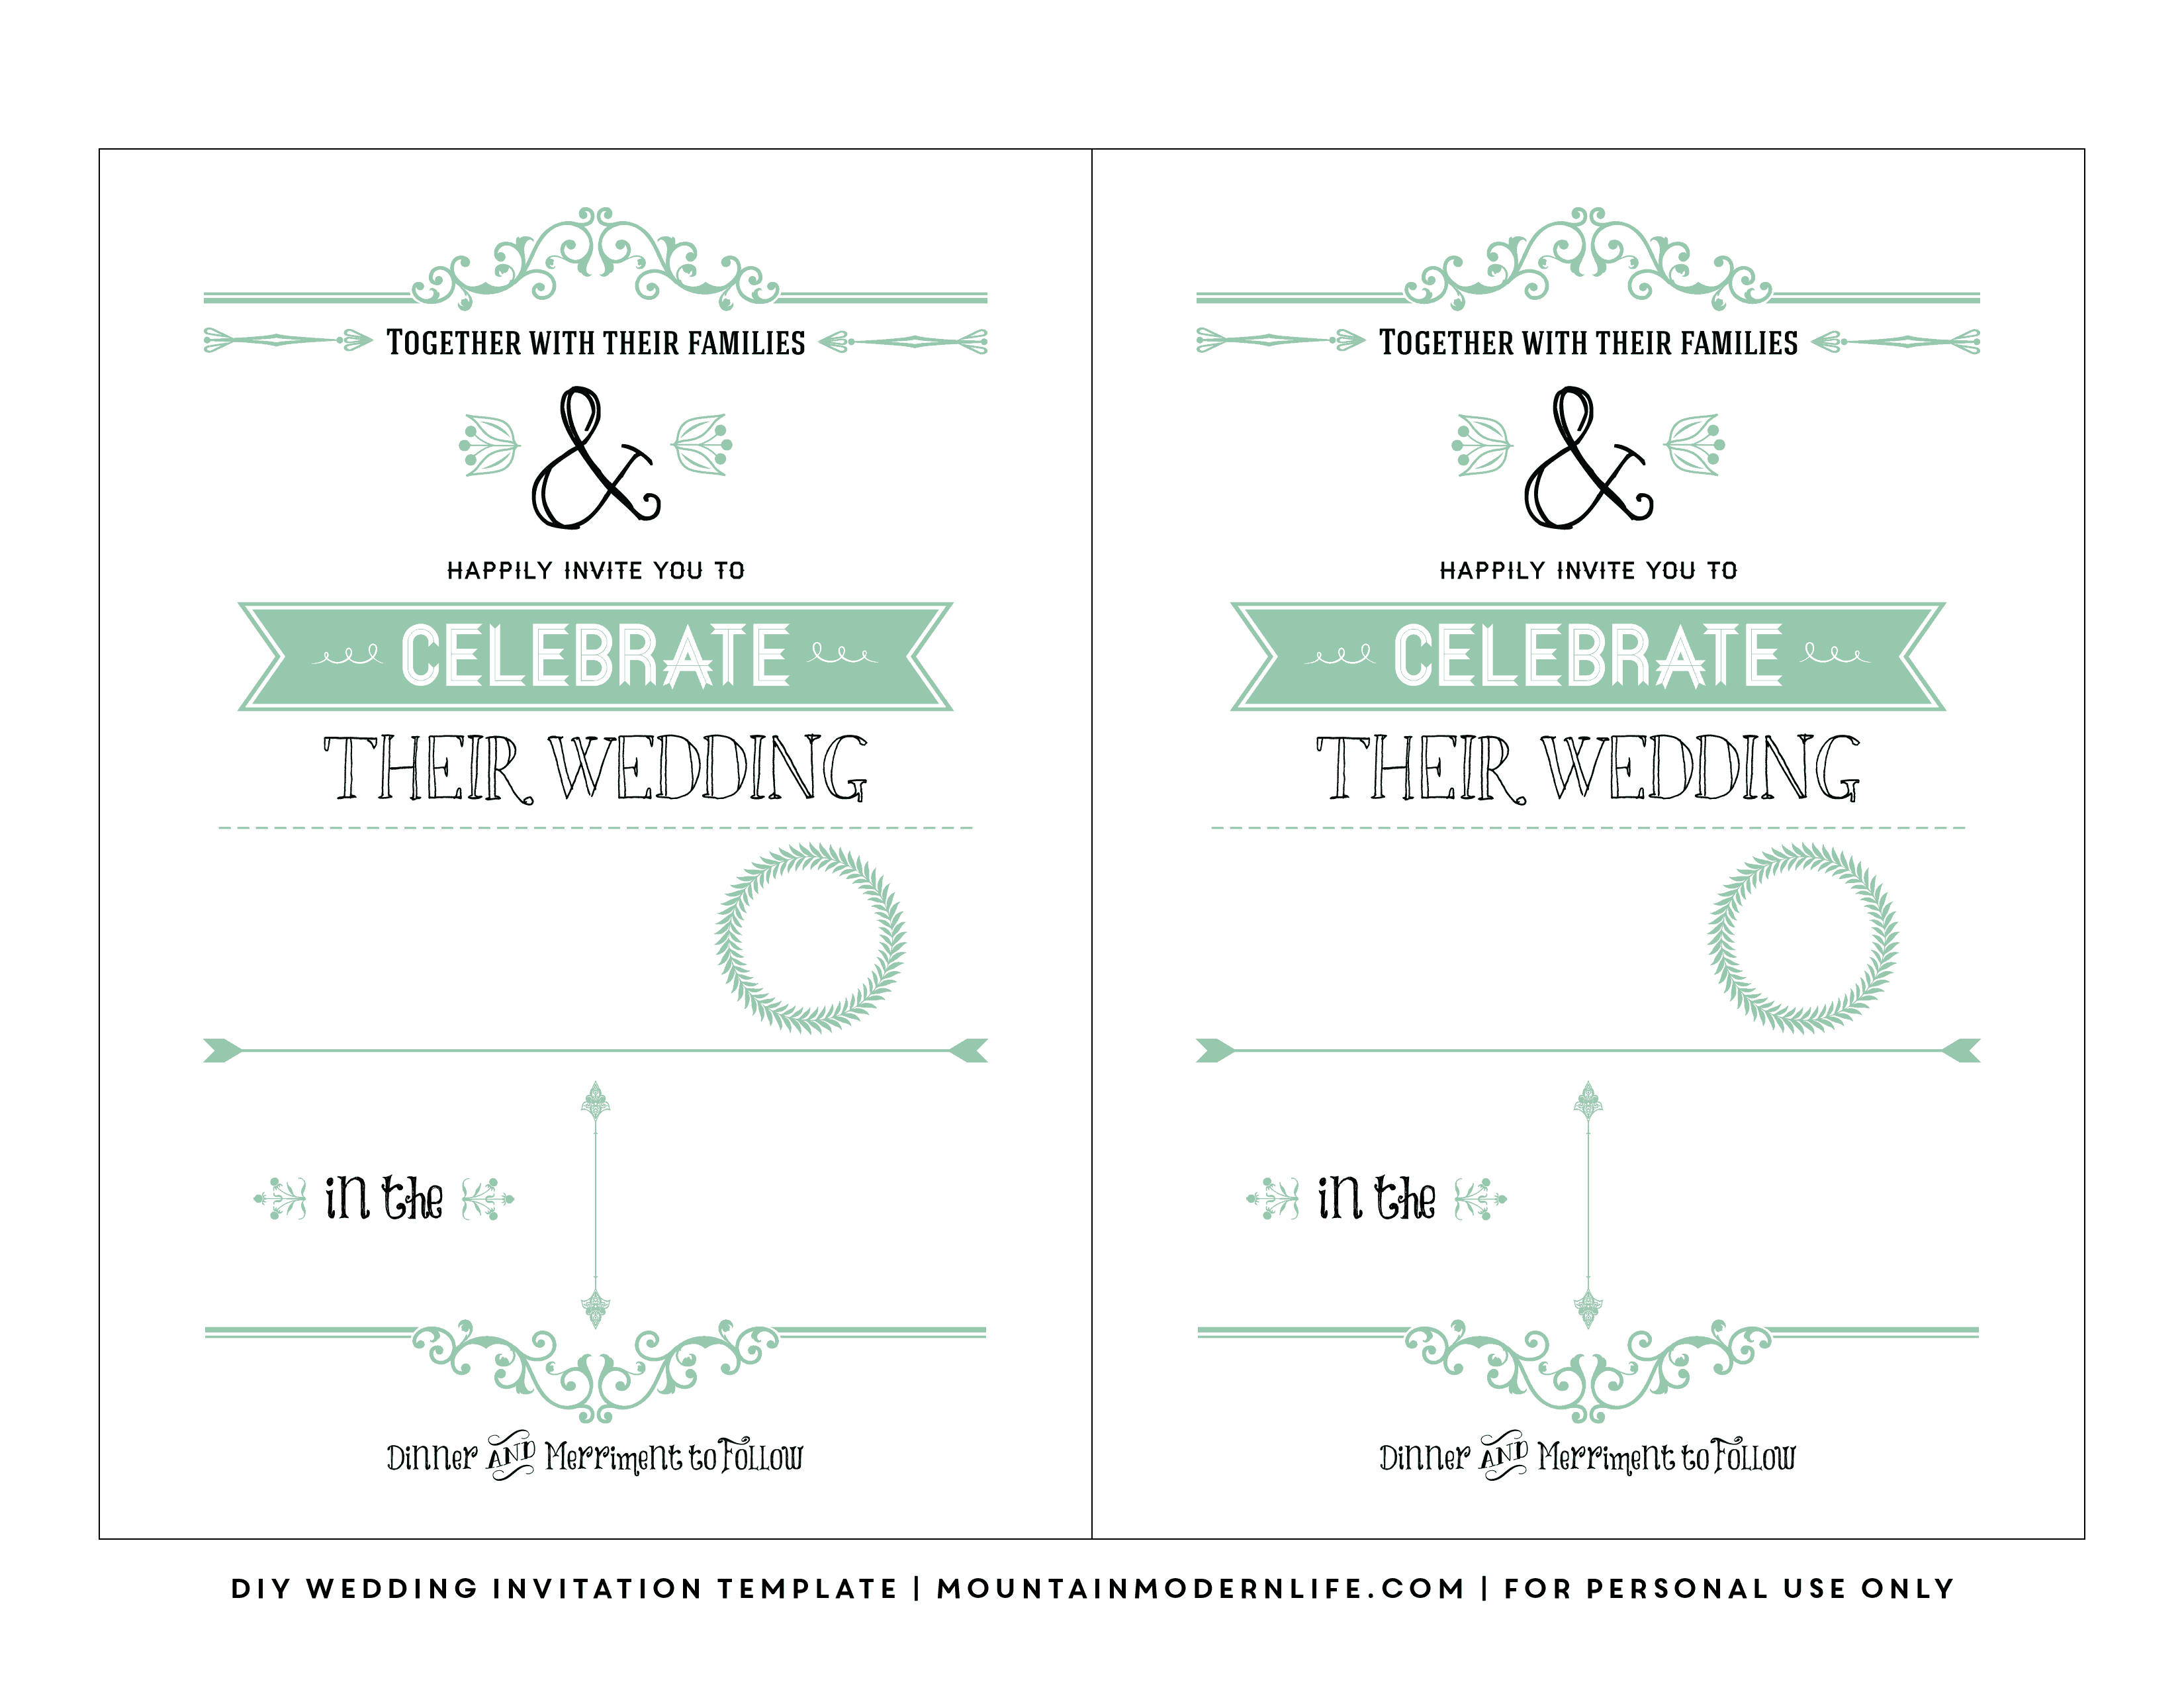 Free Wedding Invitation Template Mountainmodernlife inside size 3300 X 2550